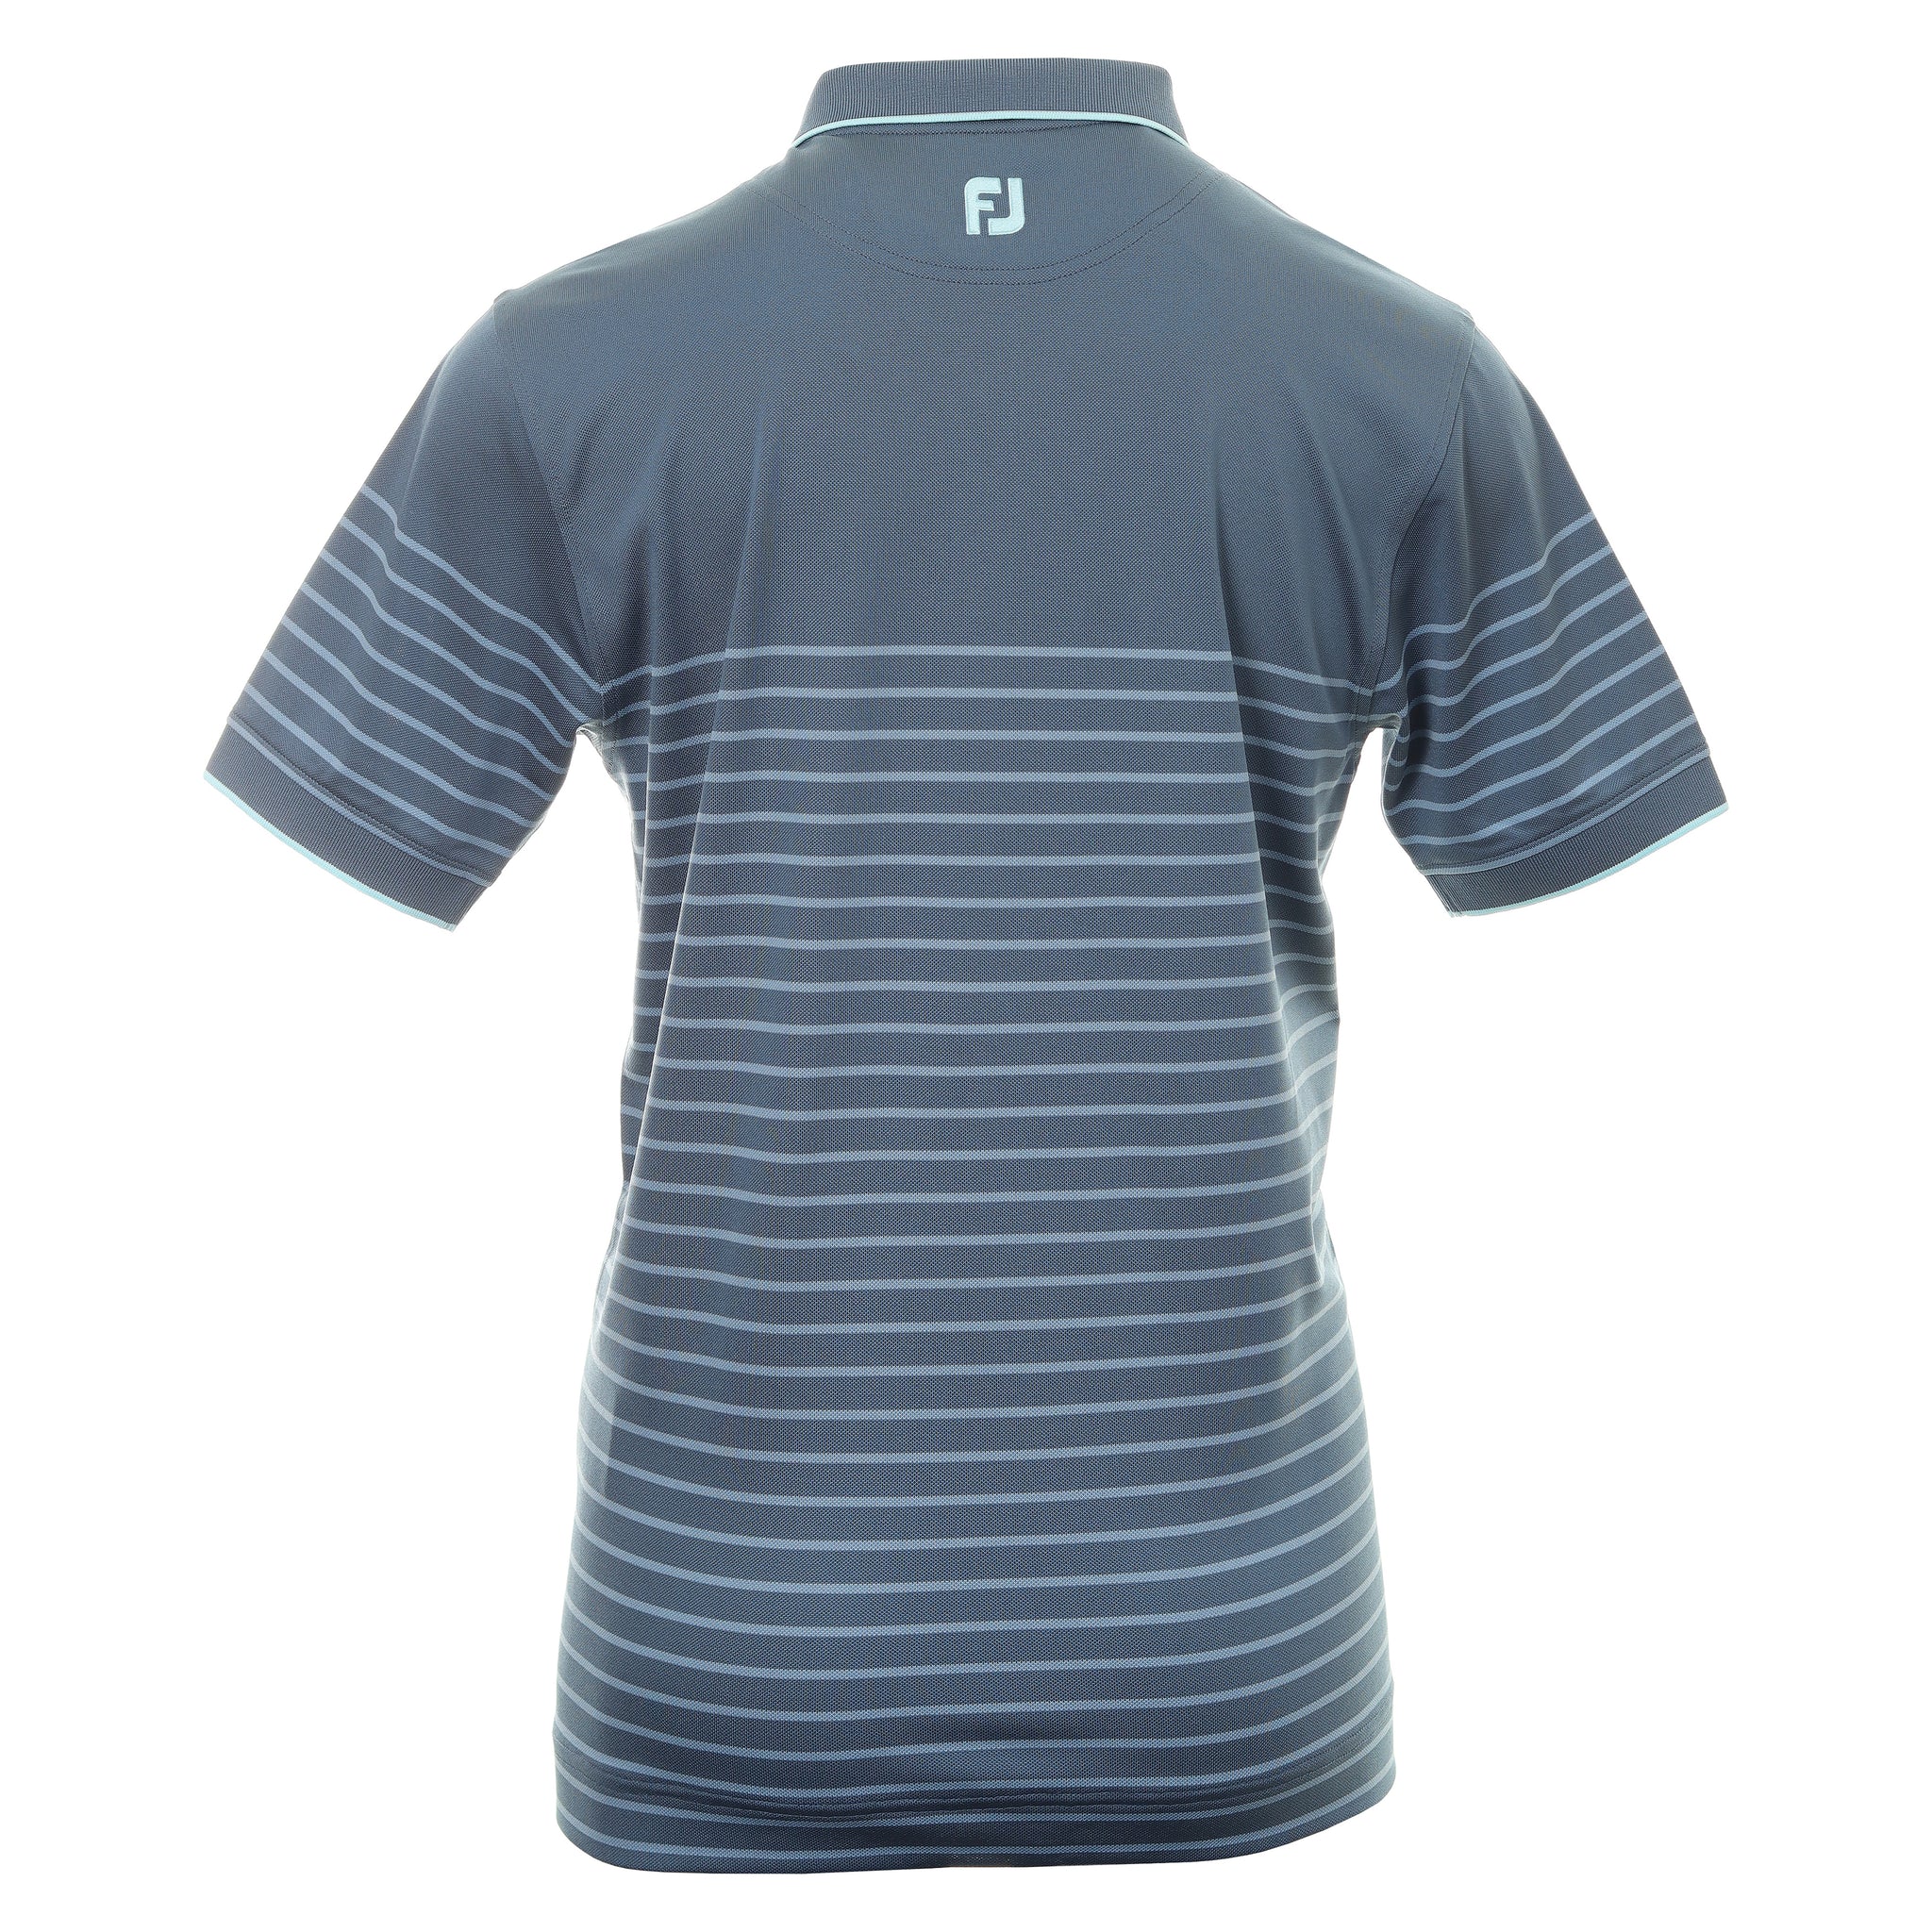 FootJoy Breton Stripe Pique Golf Shirt